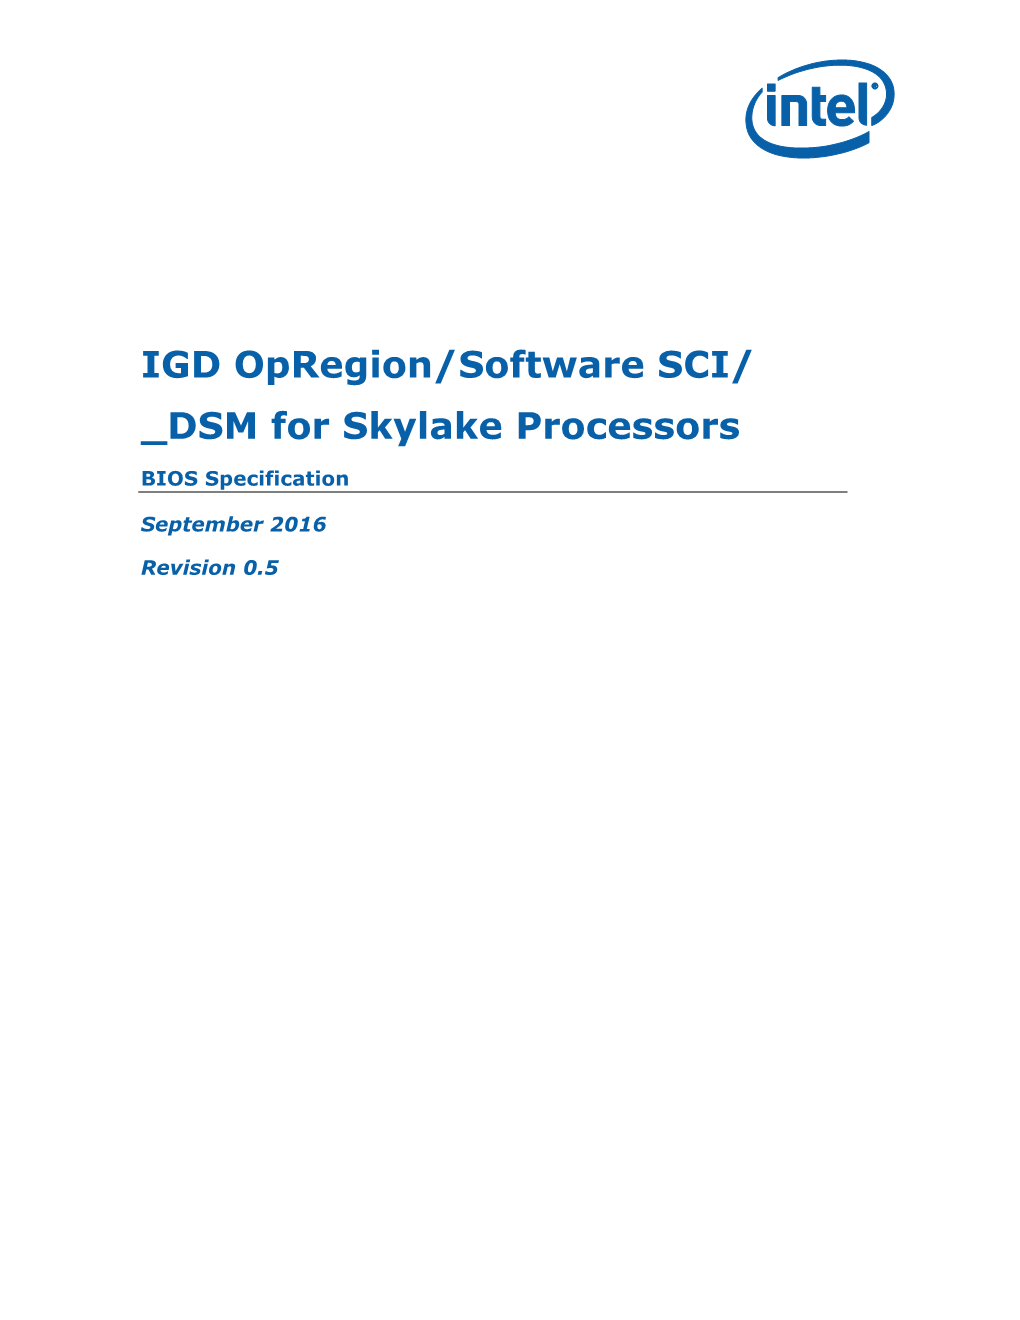 IGD Opregion/Software SCI/ DSM for Skylake Processors